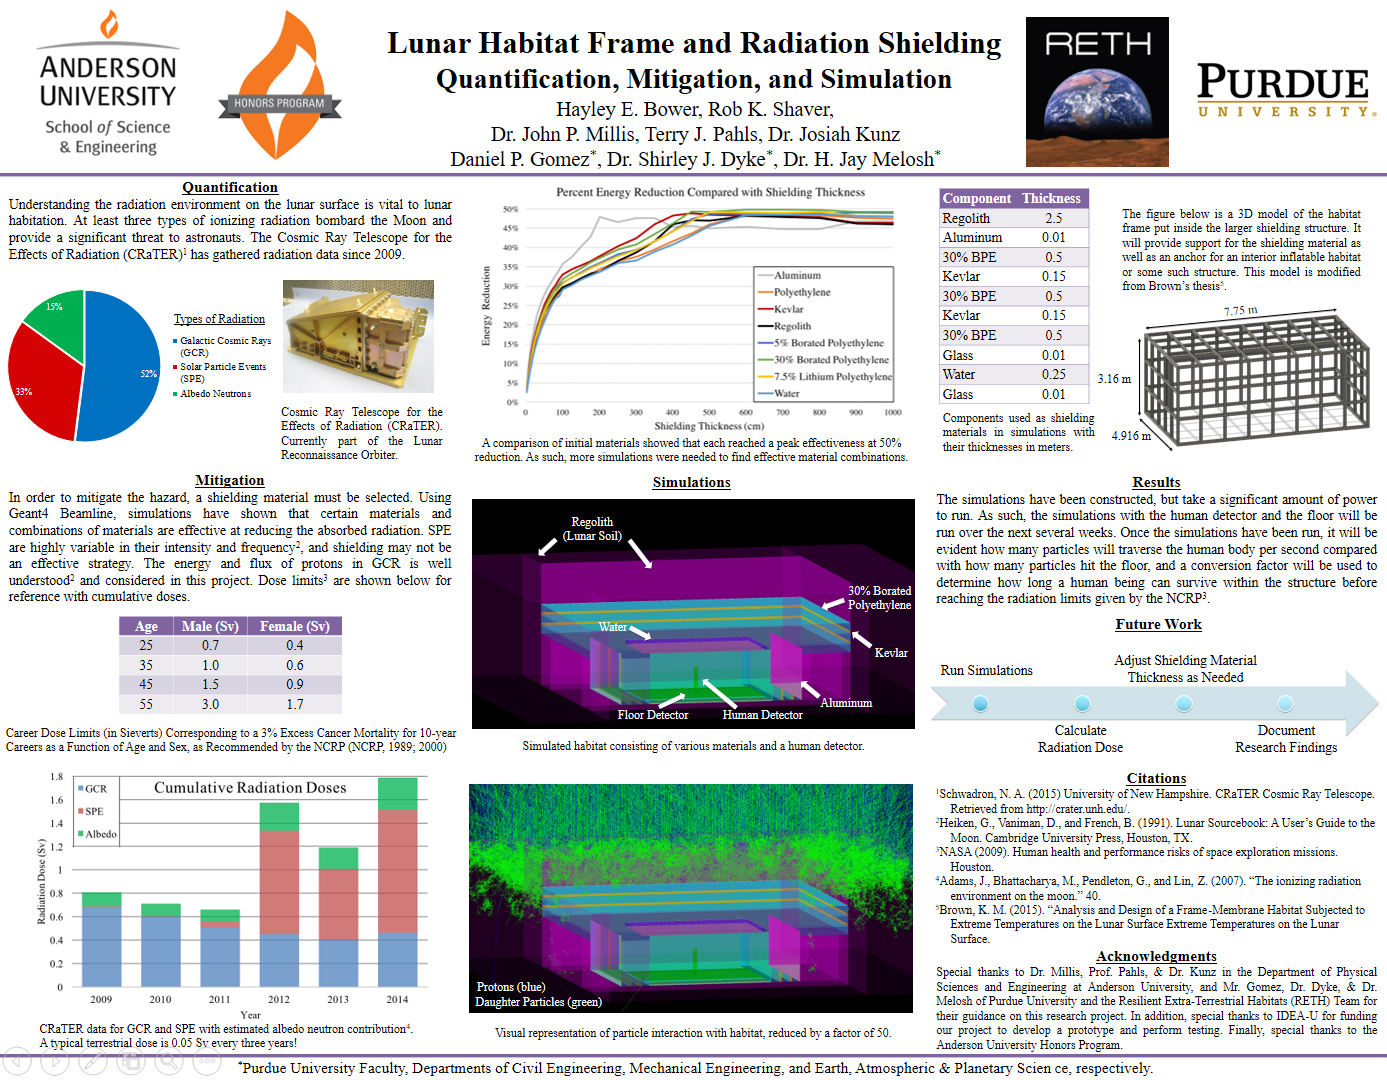 Poster for Lunar Habitat Frame and Radiation Shielding Quantification, Mitigation, and Simulation